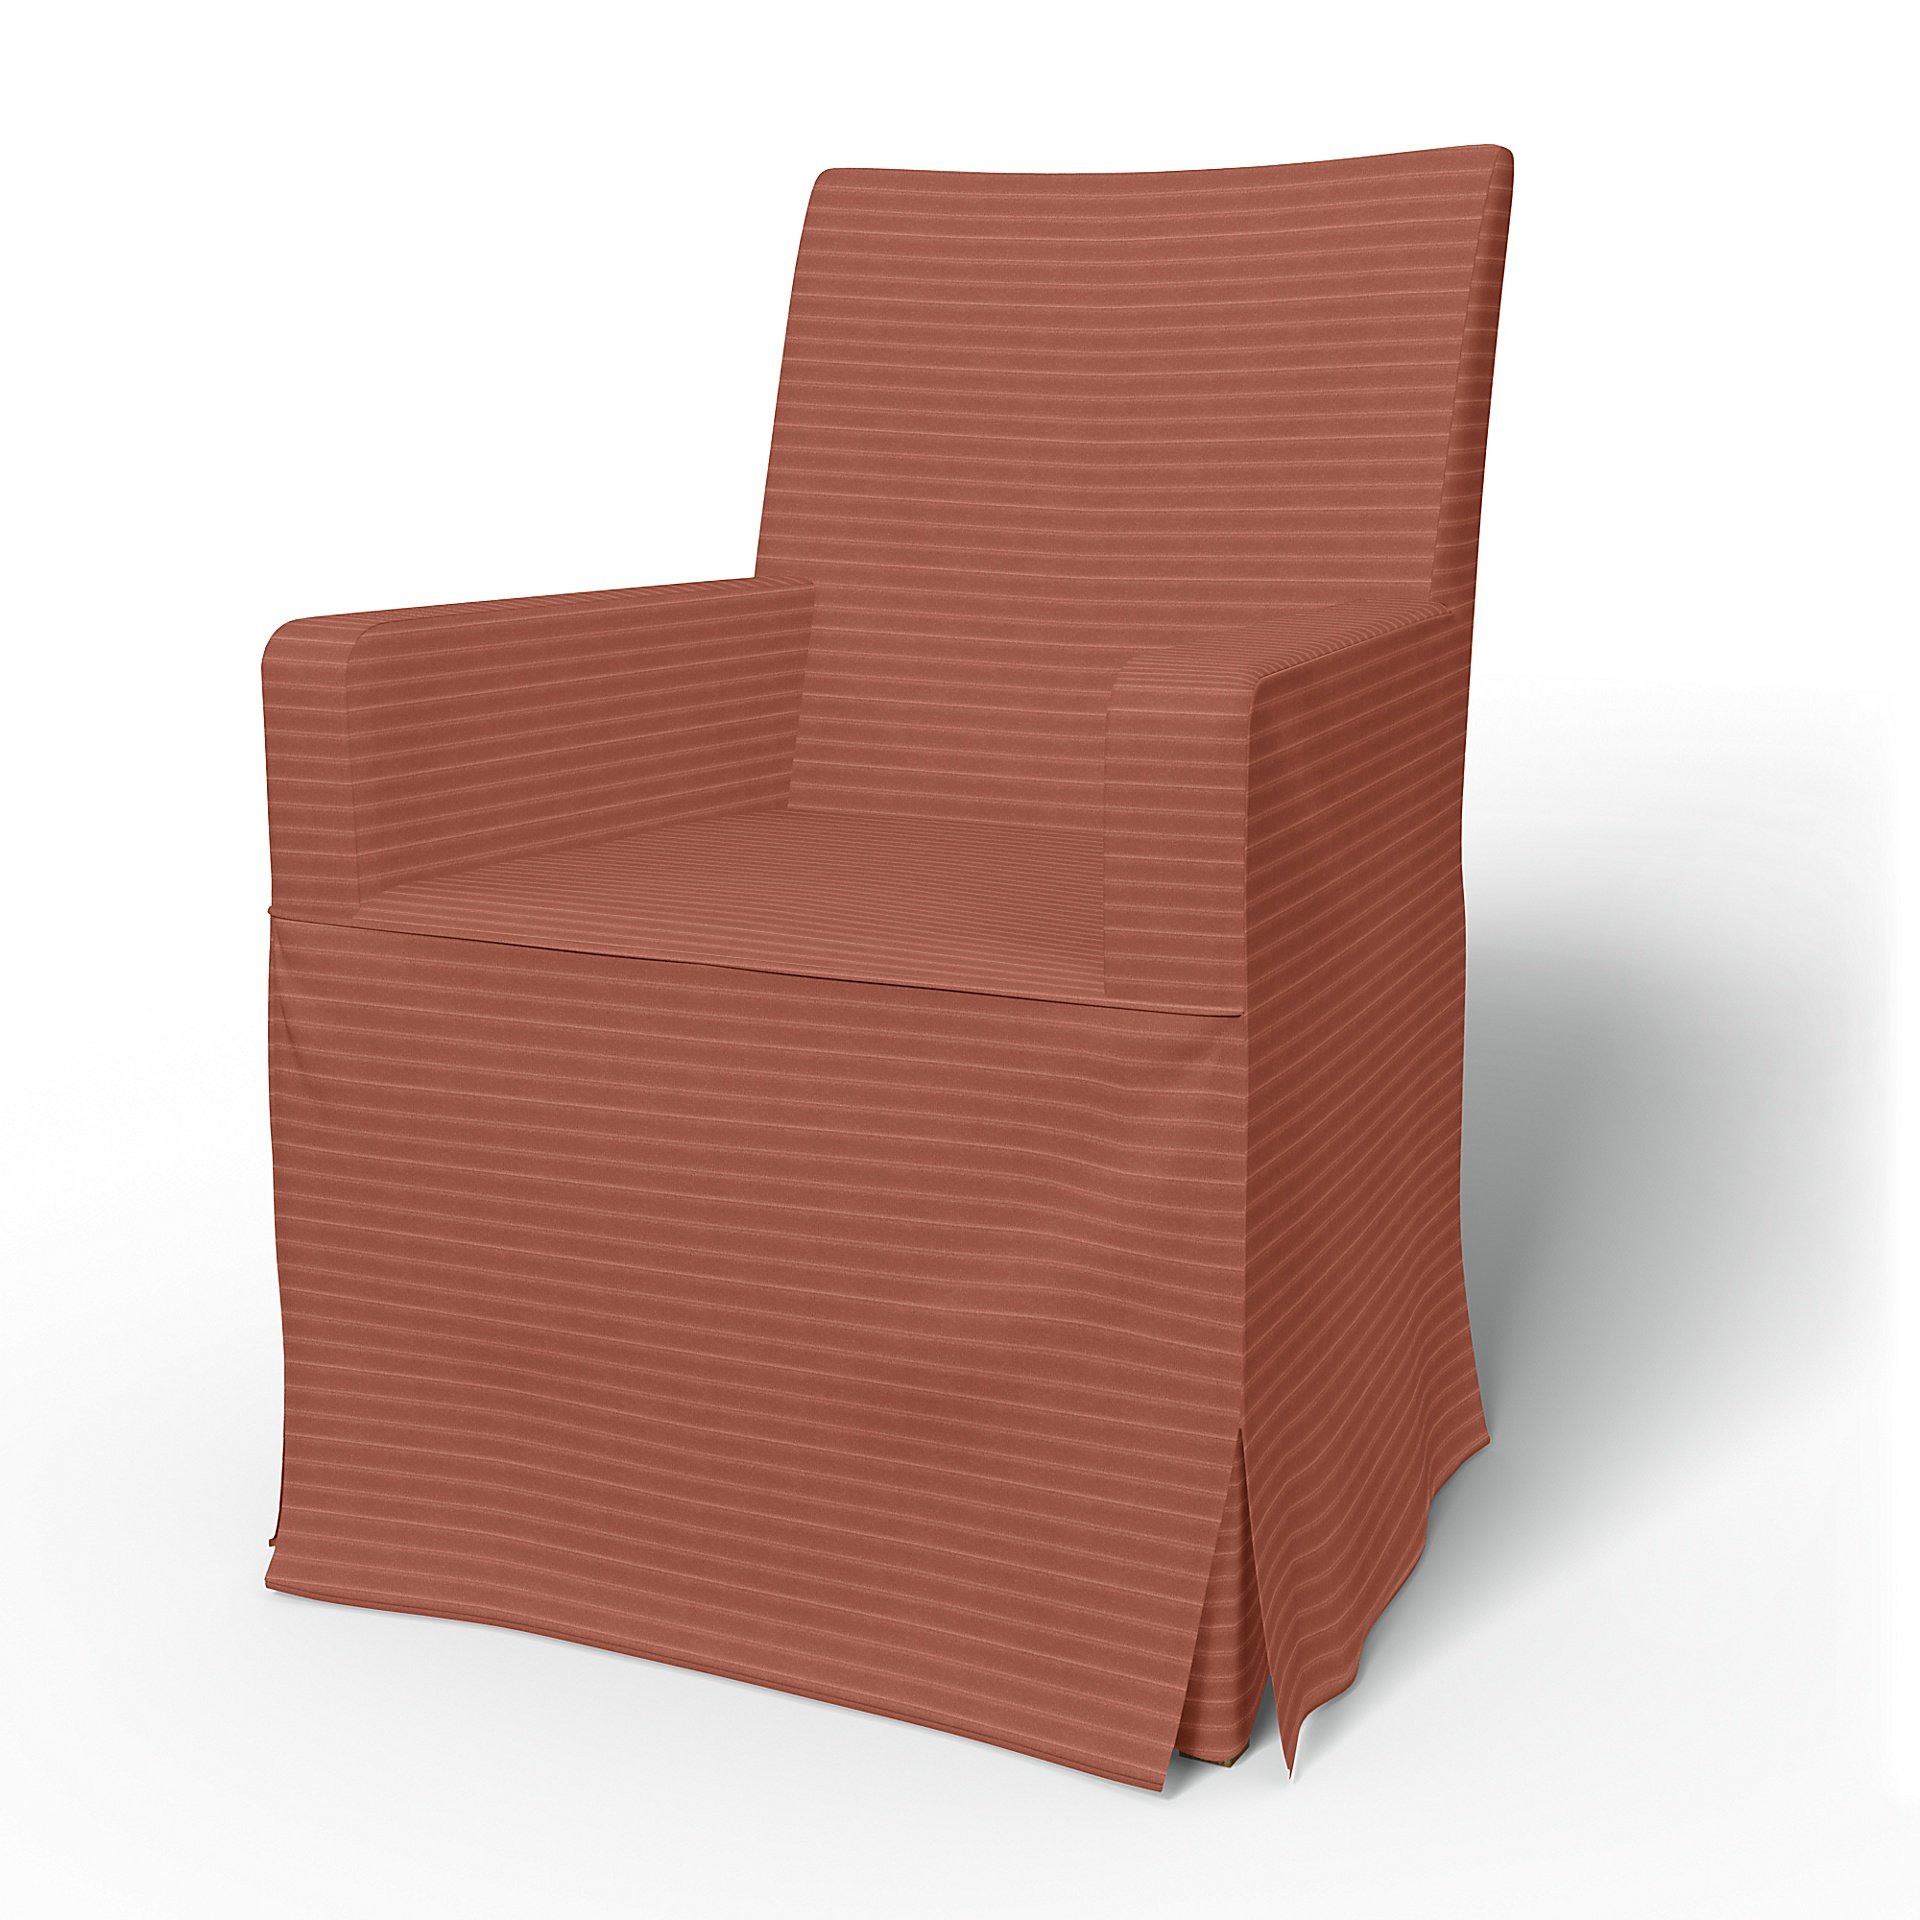 IKEA - Henriksdal, Chair cover w/ armrests, long skirt box pleat, Retro Pink, Corduroy - Bemz